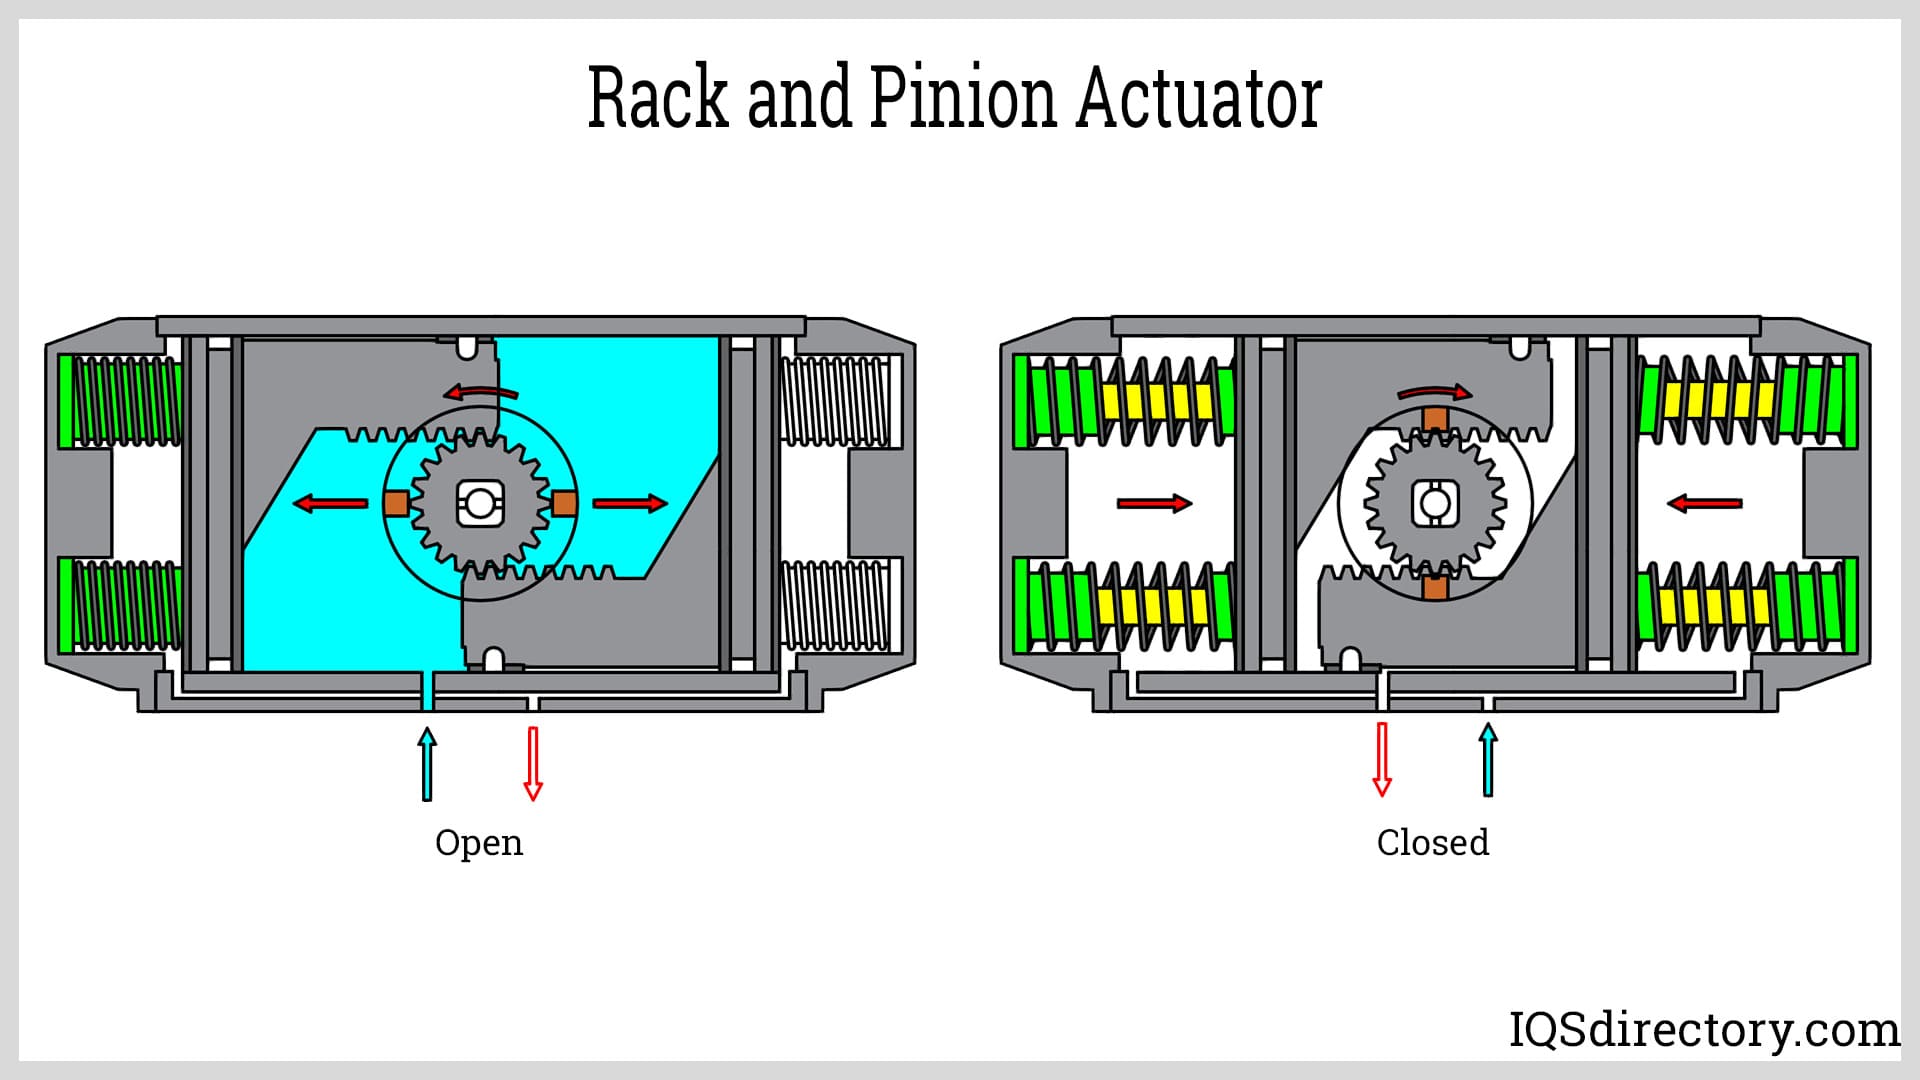 Rack and Pinion Actuator